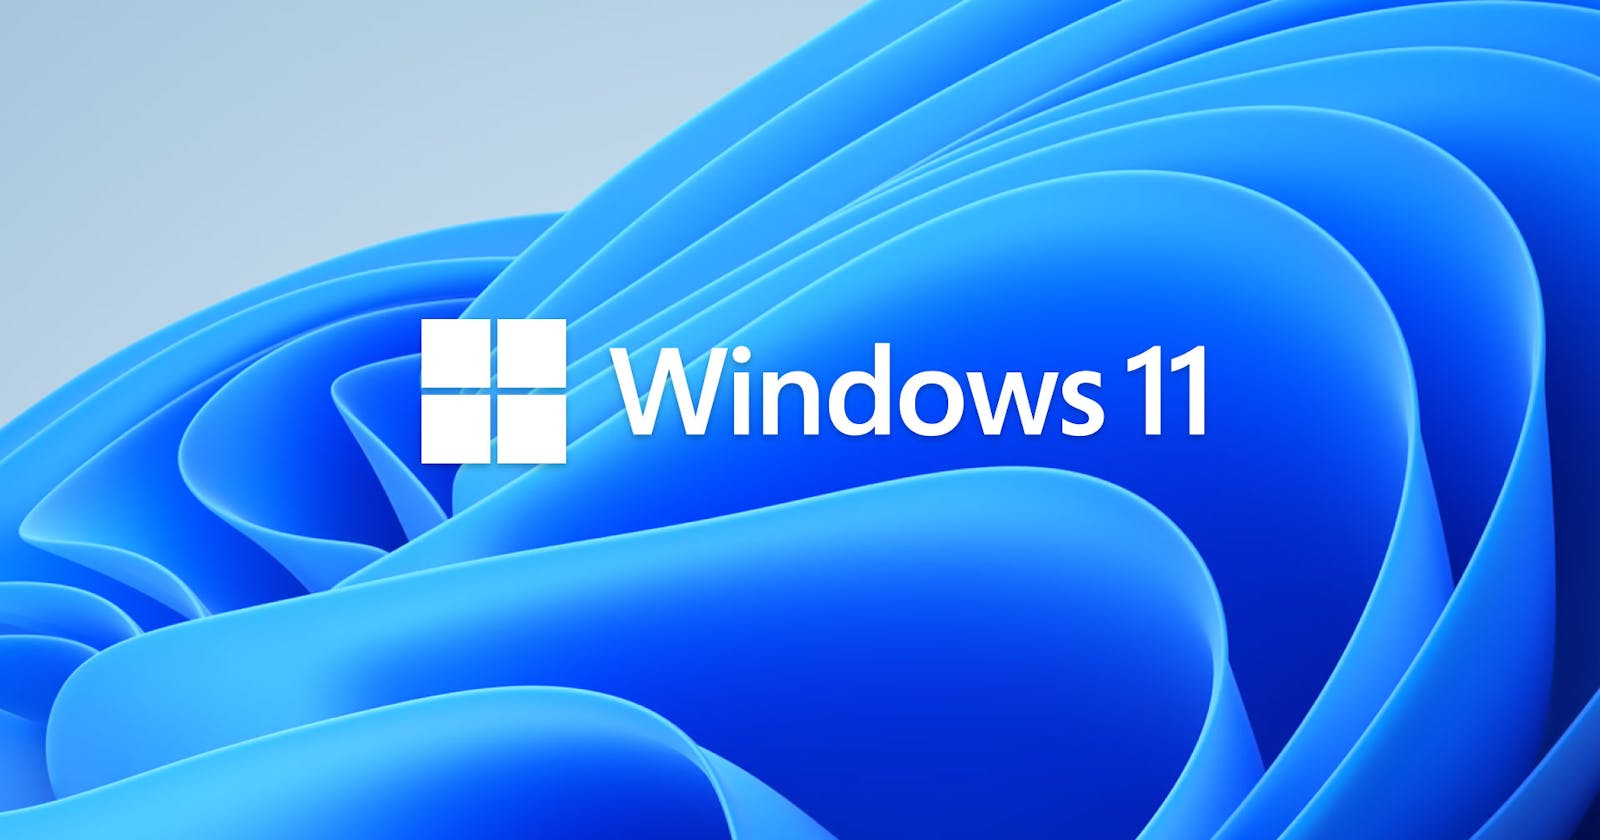 Install Windows 11 (UEFI) via USB 3.0 Drive